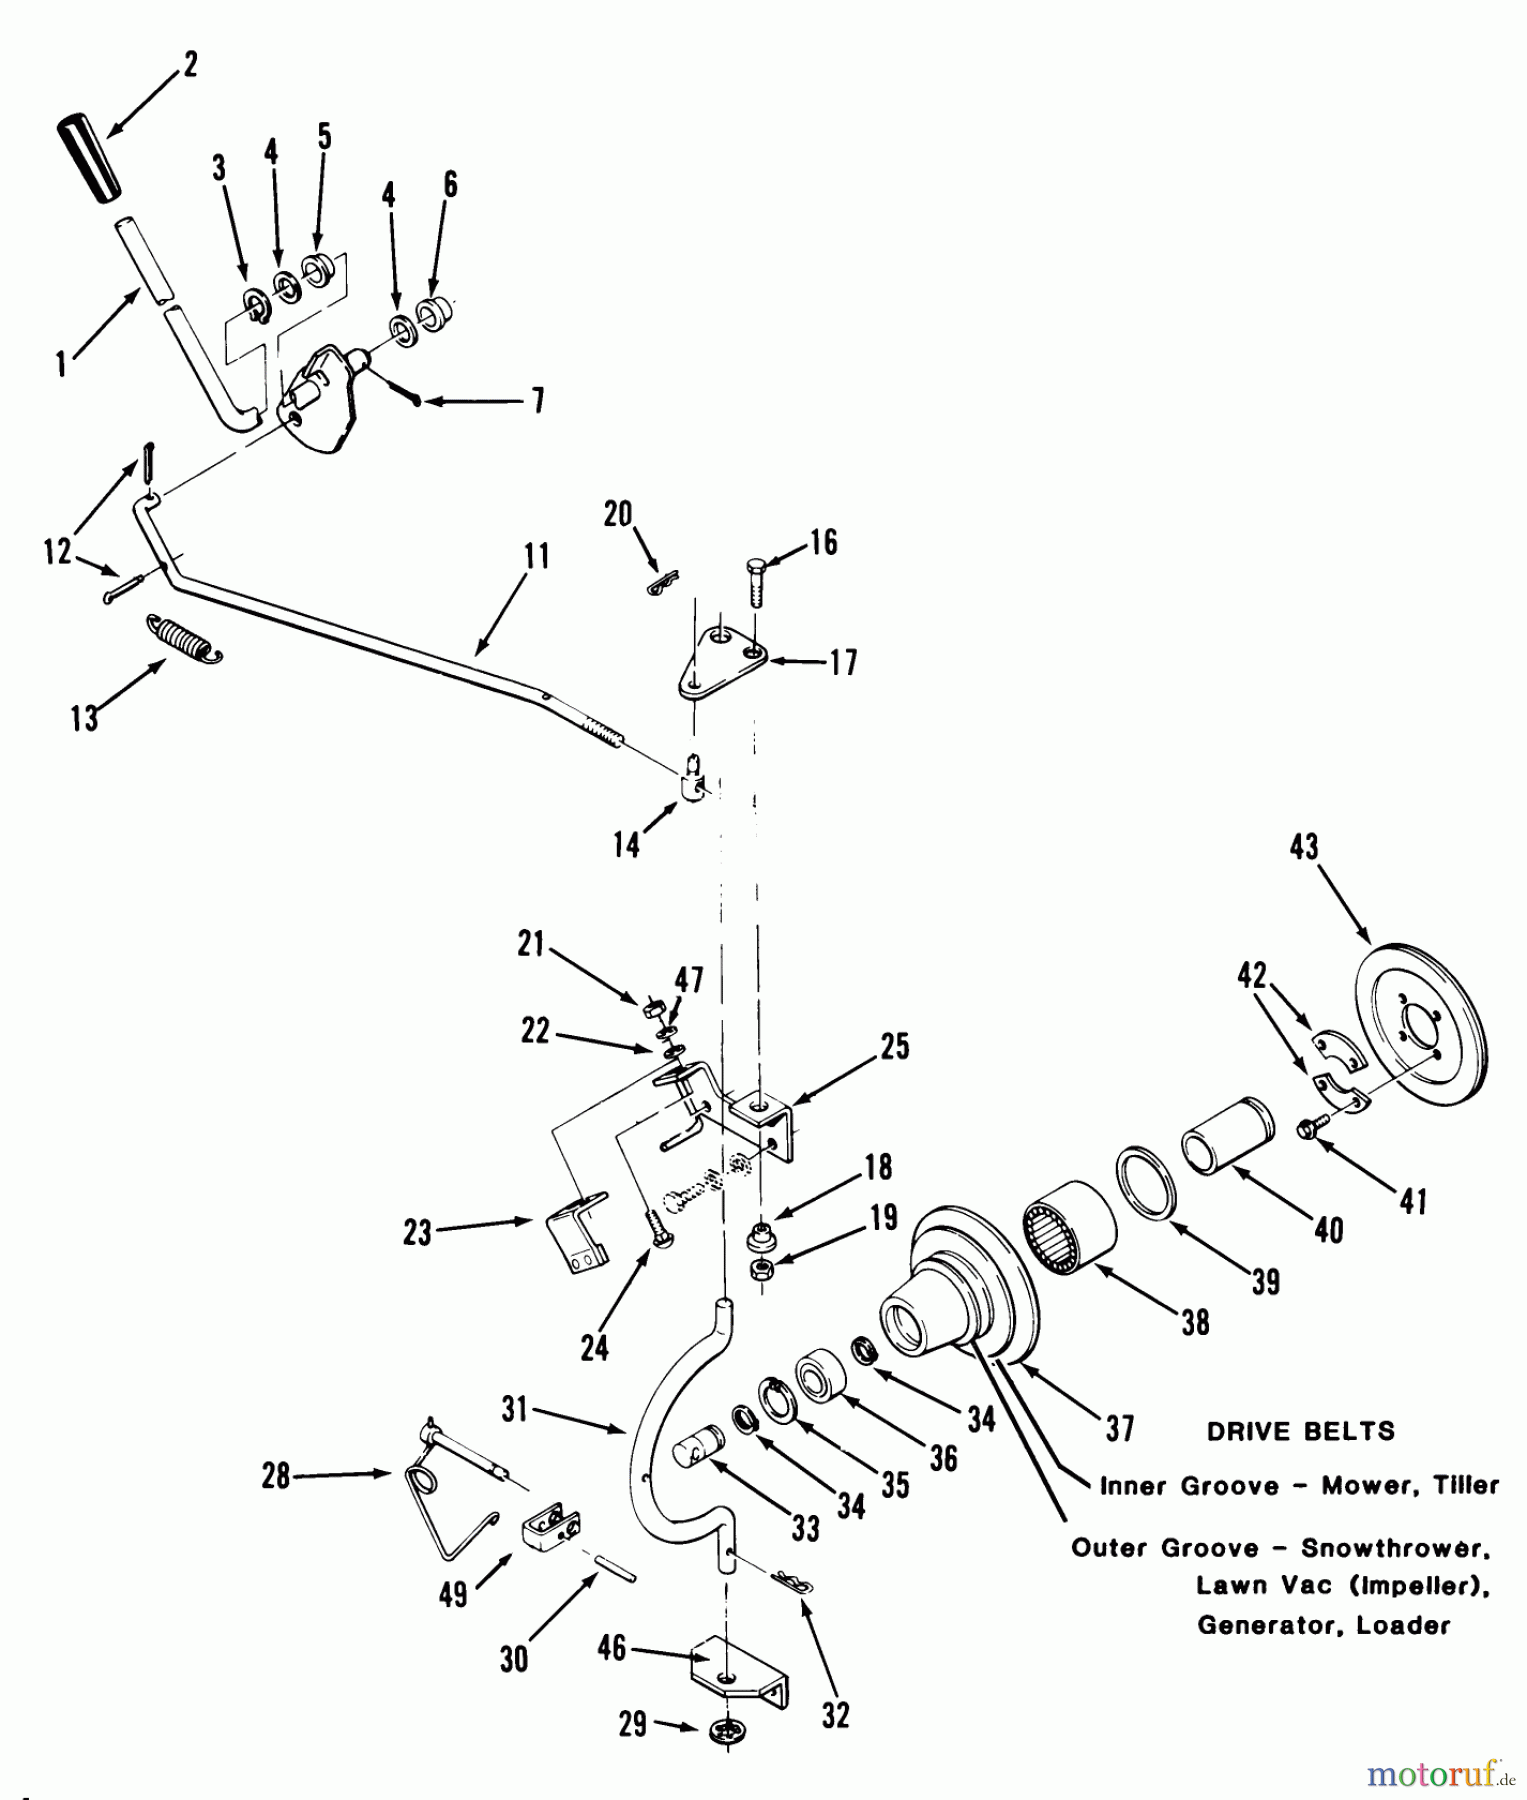  Toro Neu Mowers, Lawn & Garden Tractor Seite 1 21-10K806 (310-8) - Toro 310-8 Garden Tractor, 1989 PTO CLUTCH AND CONTROL